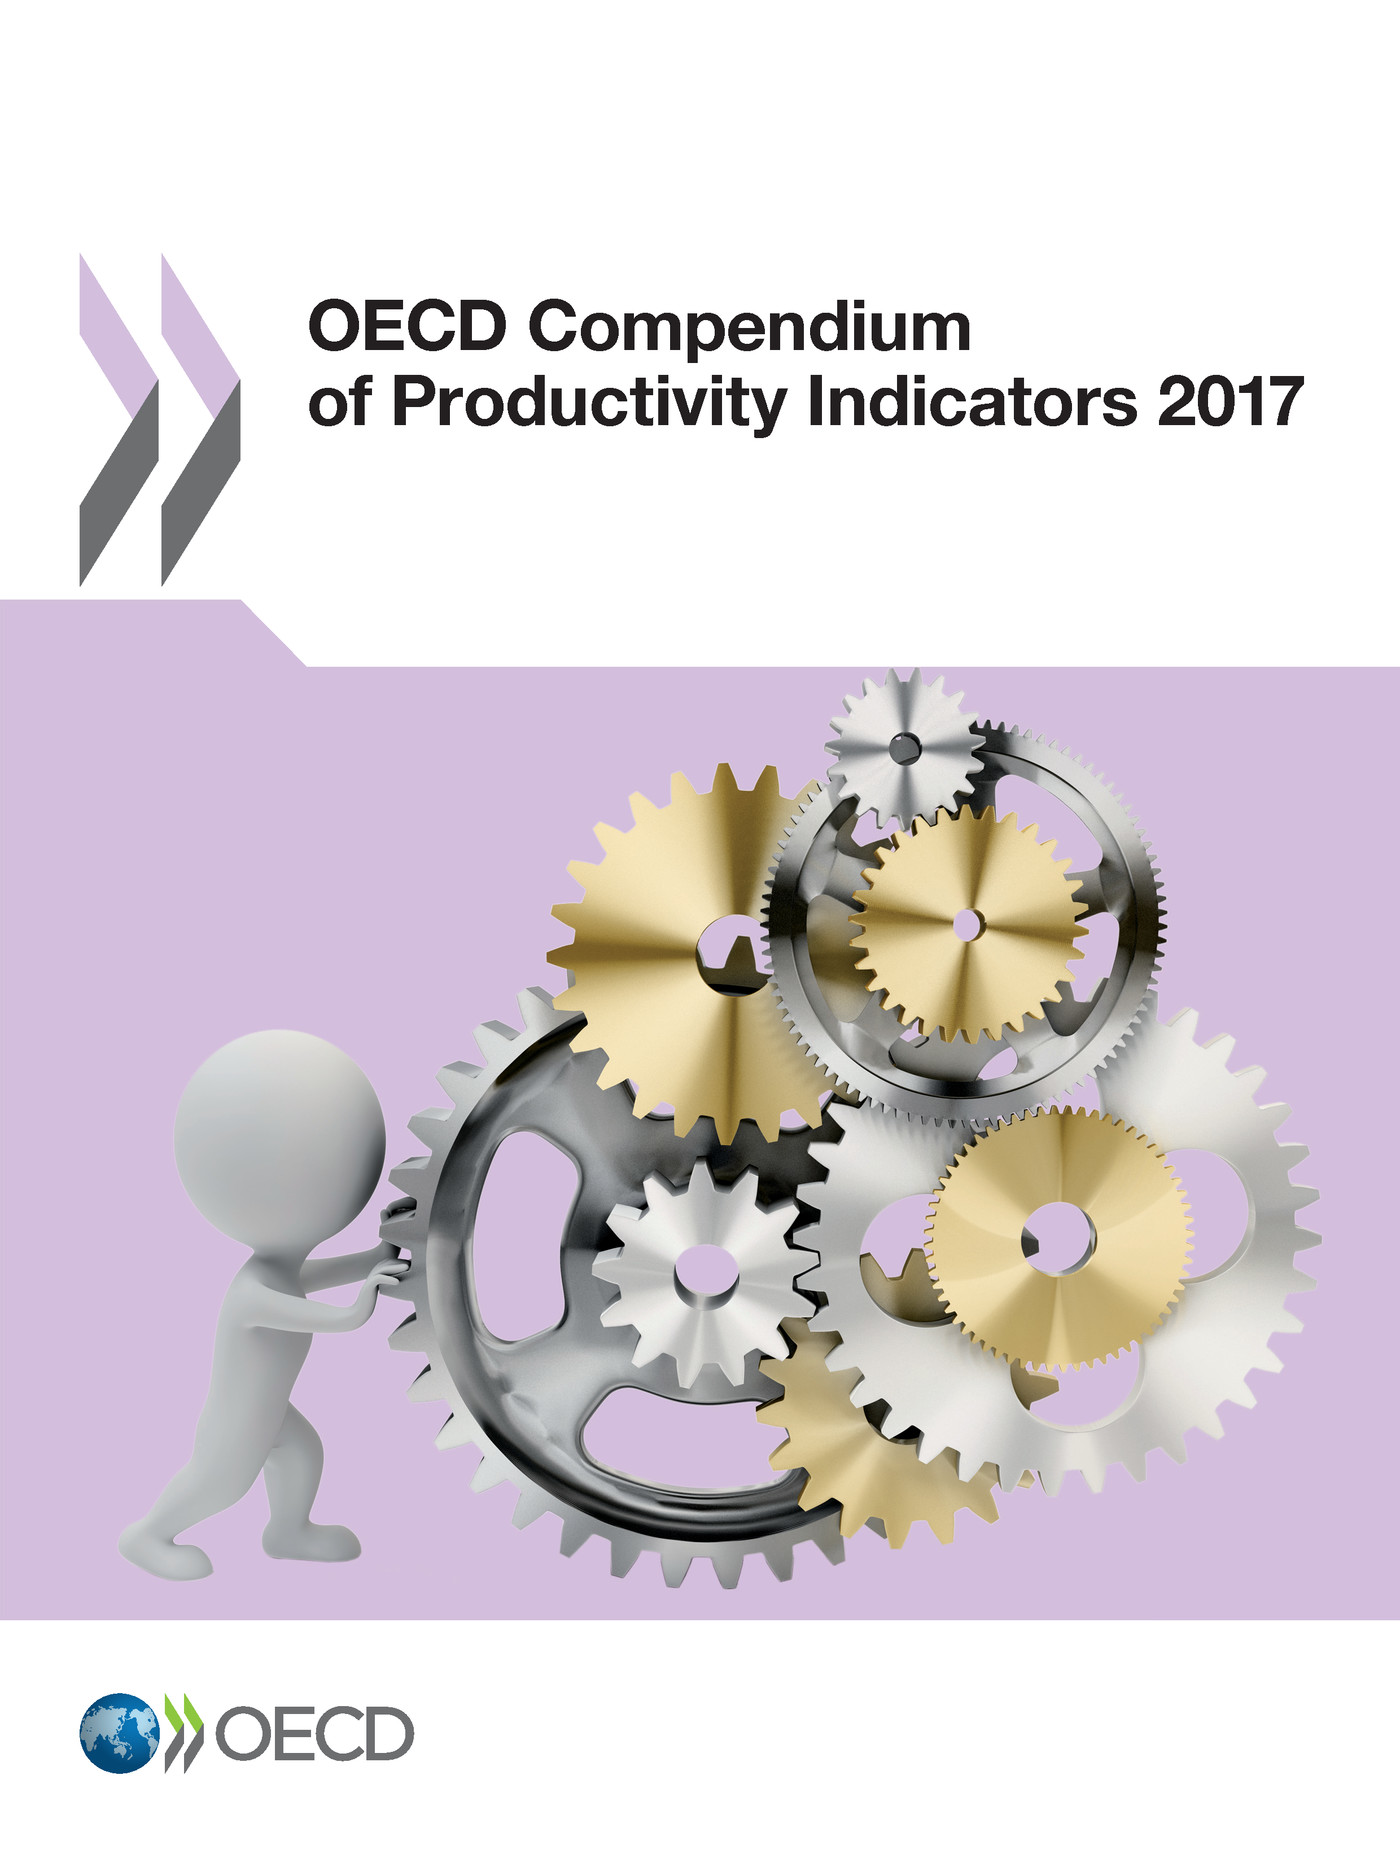 OECD Compendium of Productivity Indicators 2017 -  Collectif - OCDE / OECD